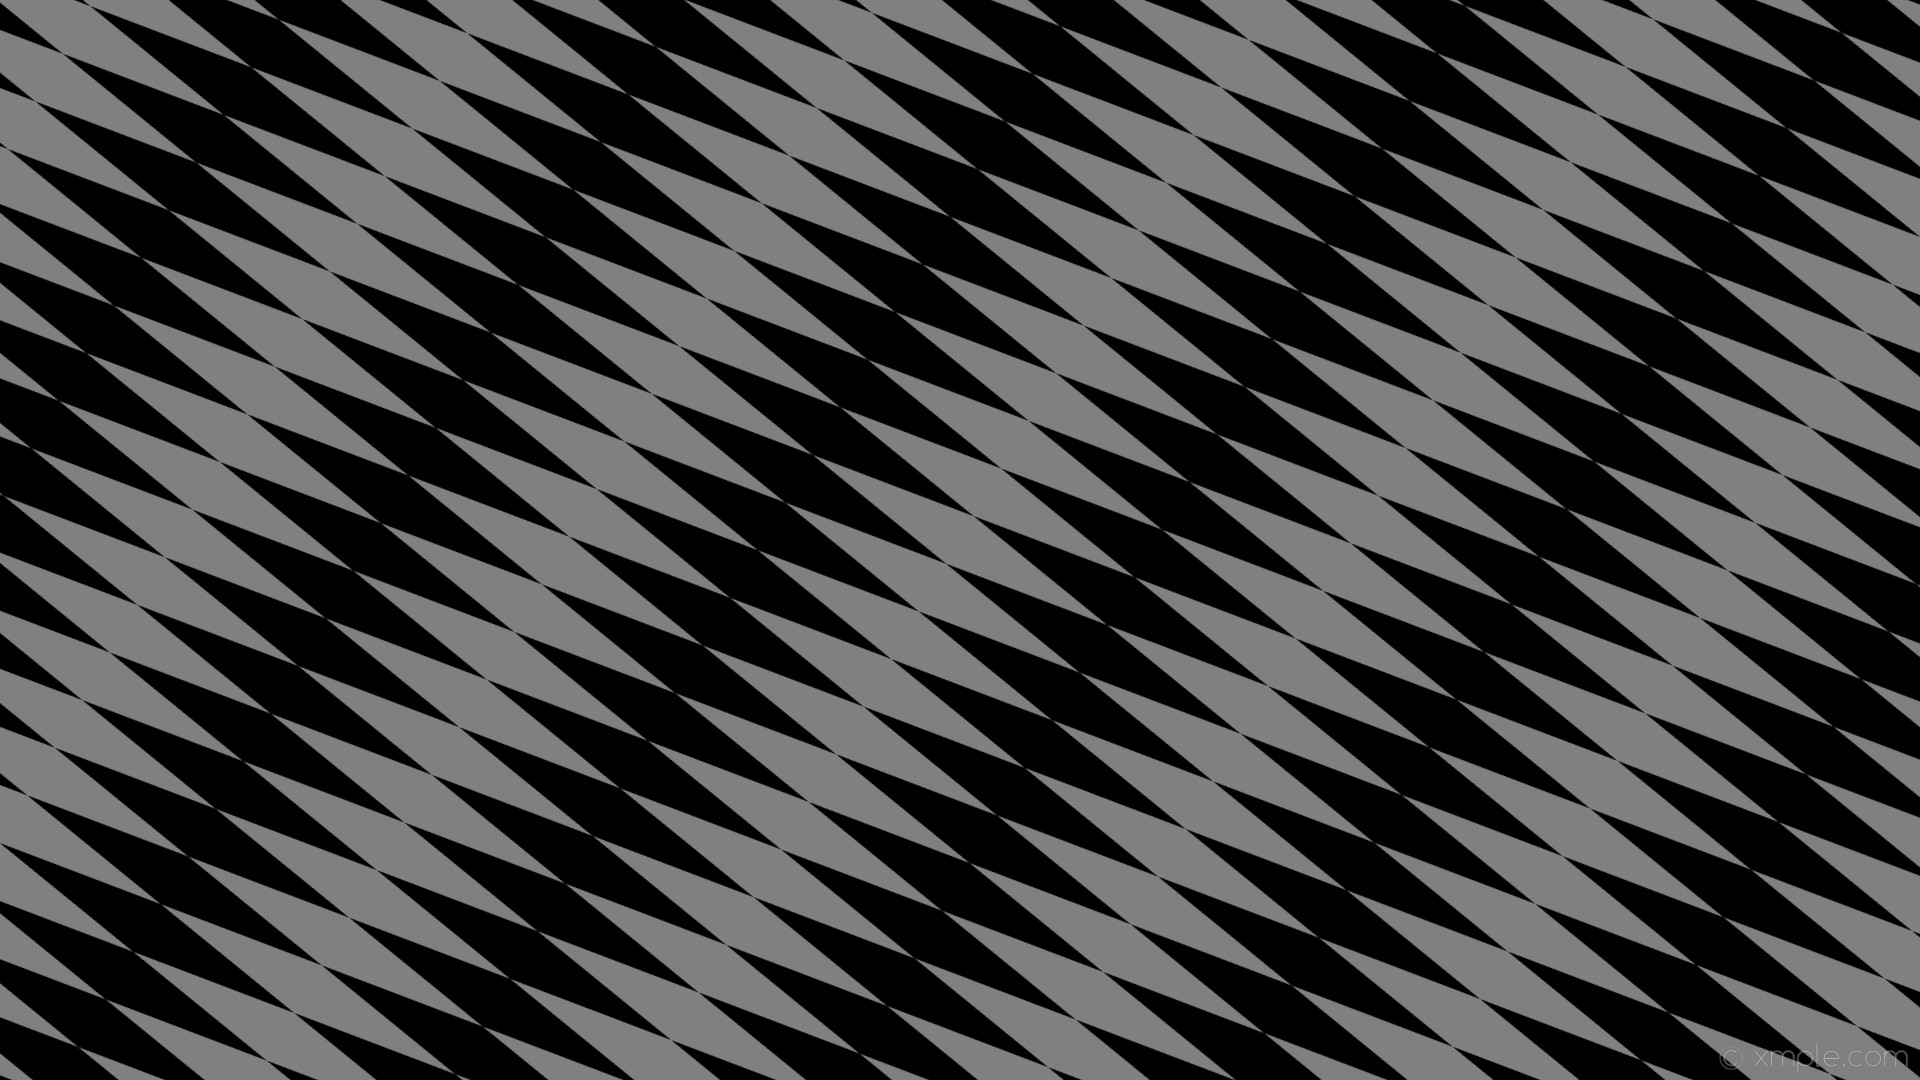 1920x1080 wallpaper rhombus grey lozenge black diamond gray #808080 #000000 150Â°  340px 55px